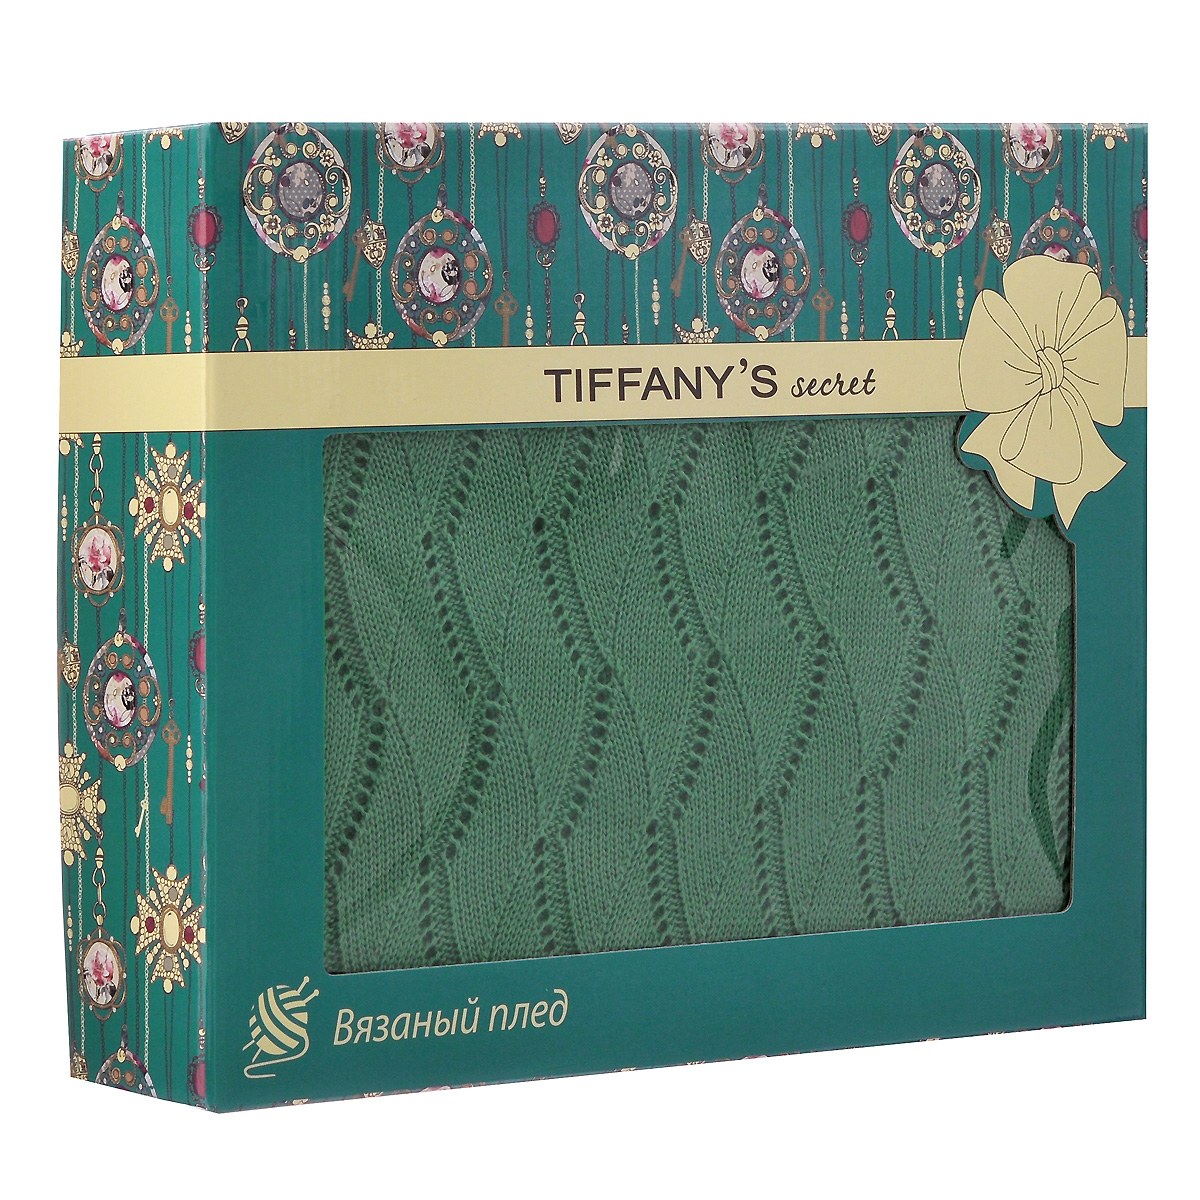  Tiffany's Secret "", :  , 140   180 